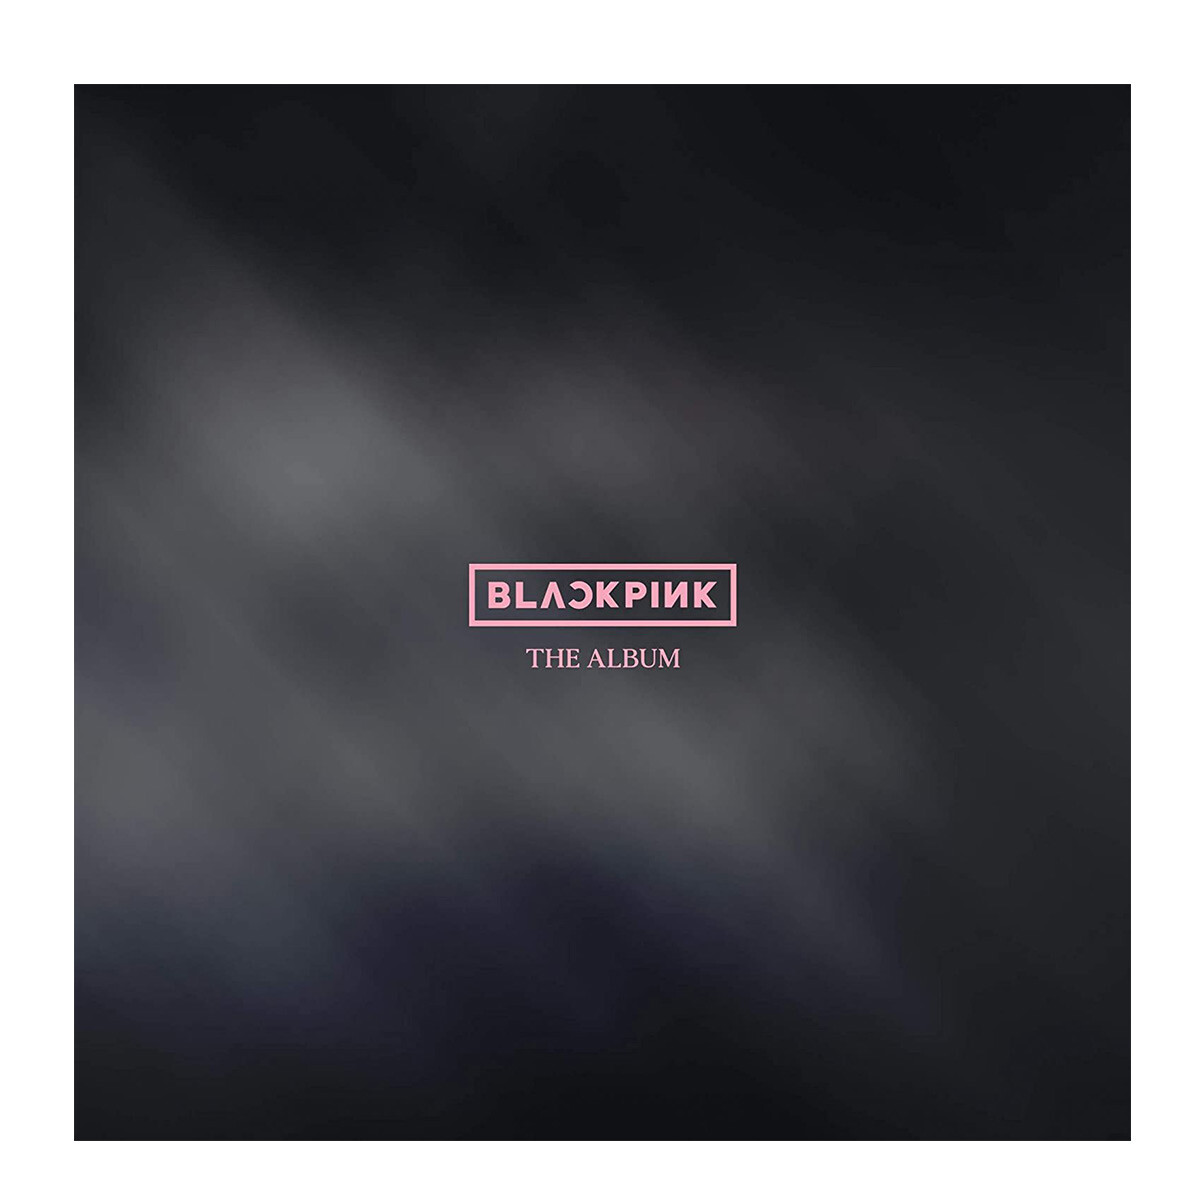 (kp) Blackpink - Album (version 3) (cd) 